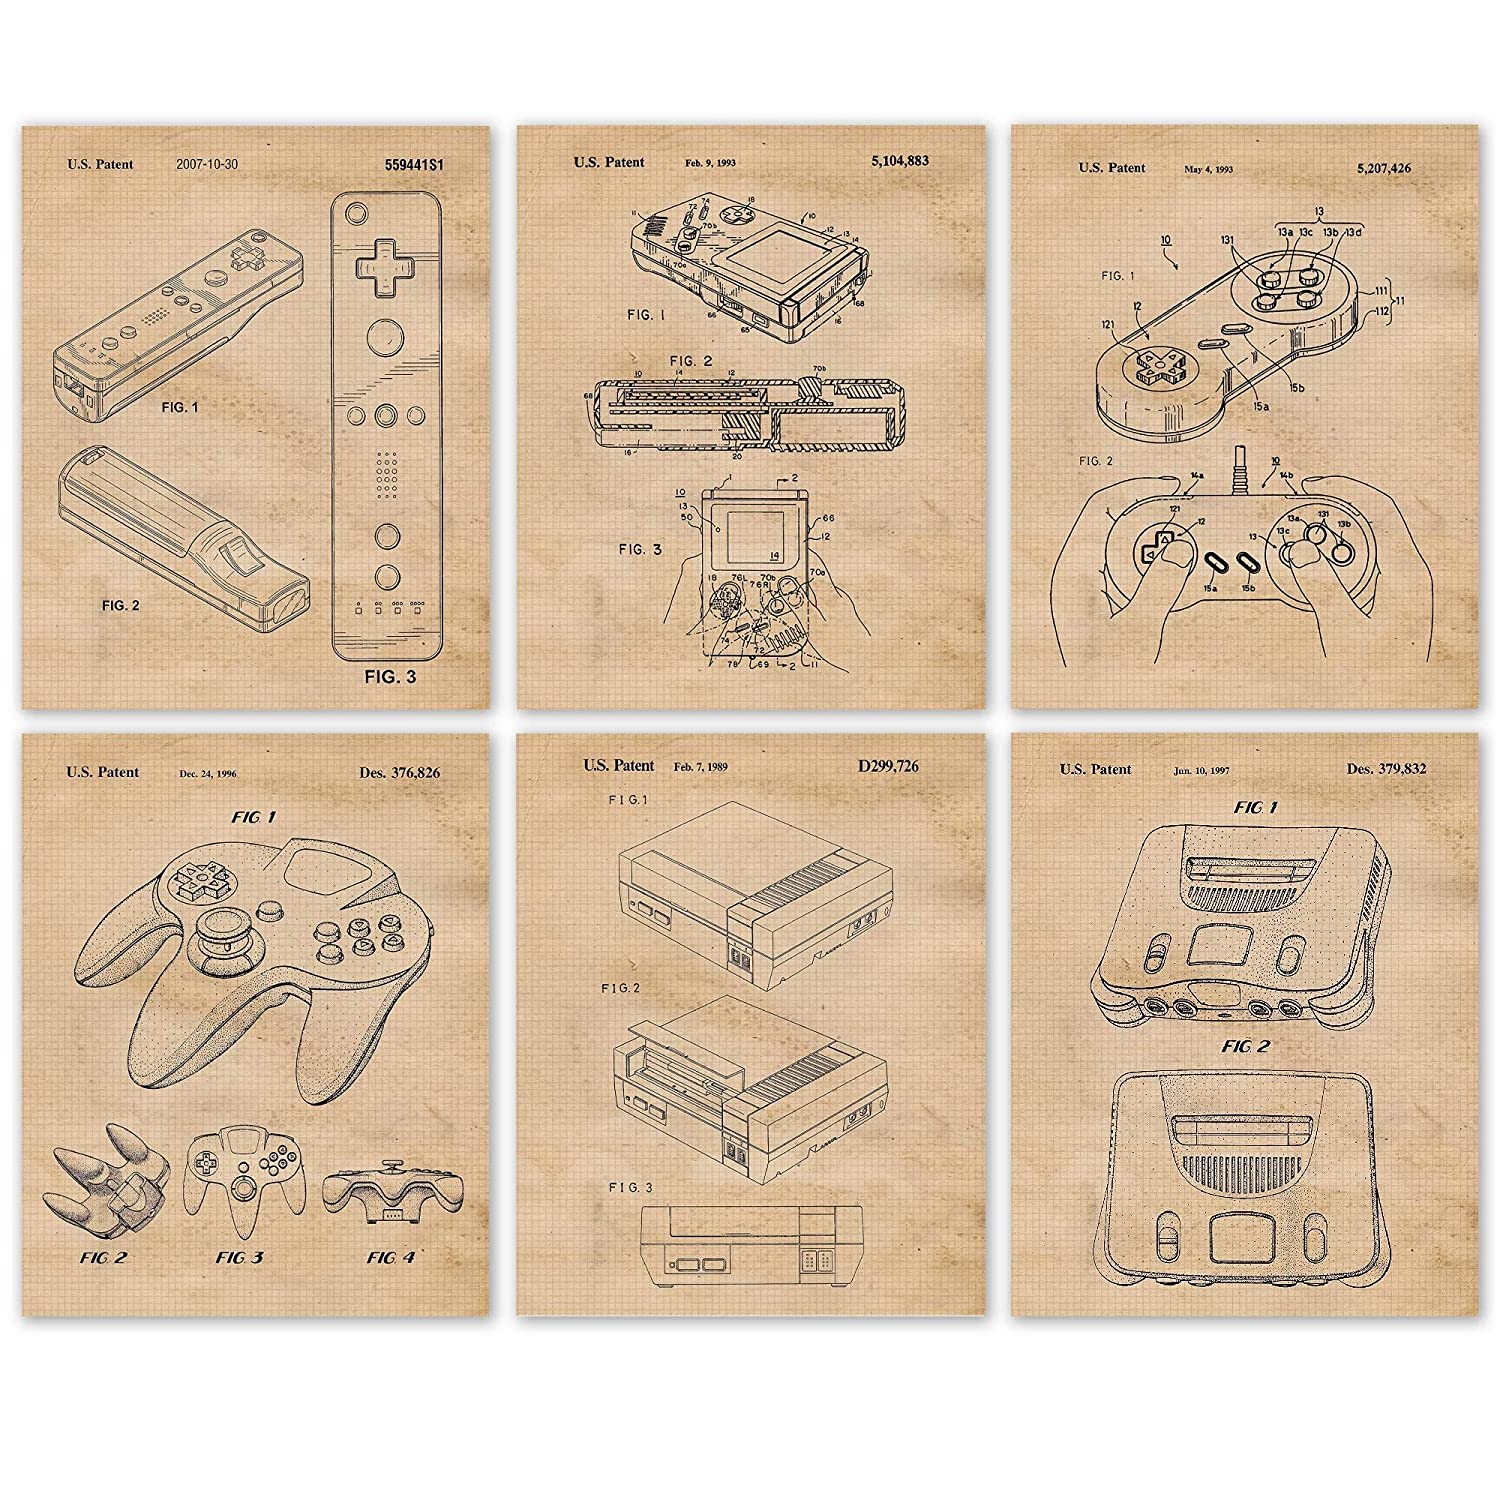 Nintendo Patents Poster